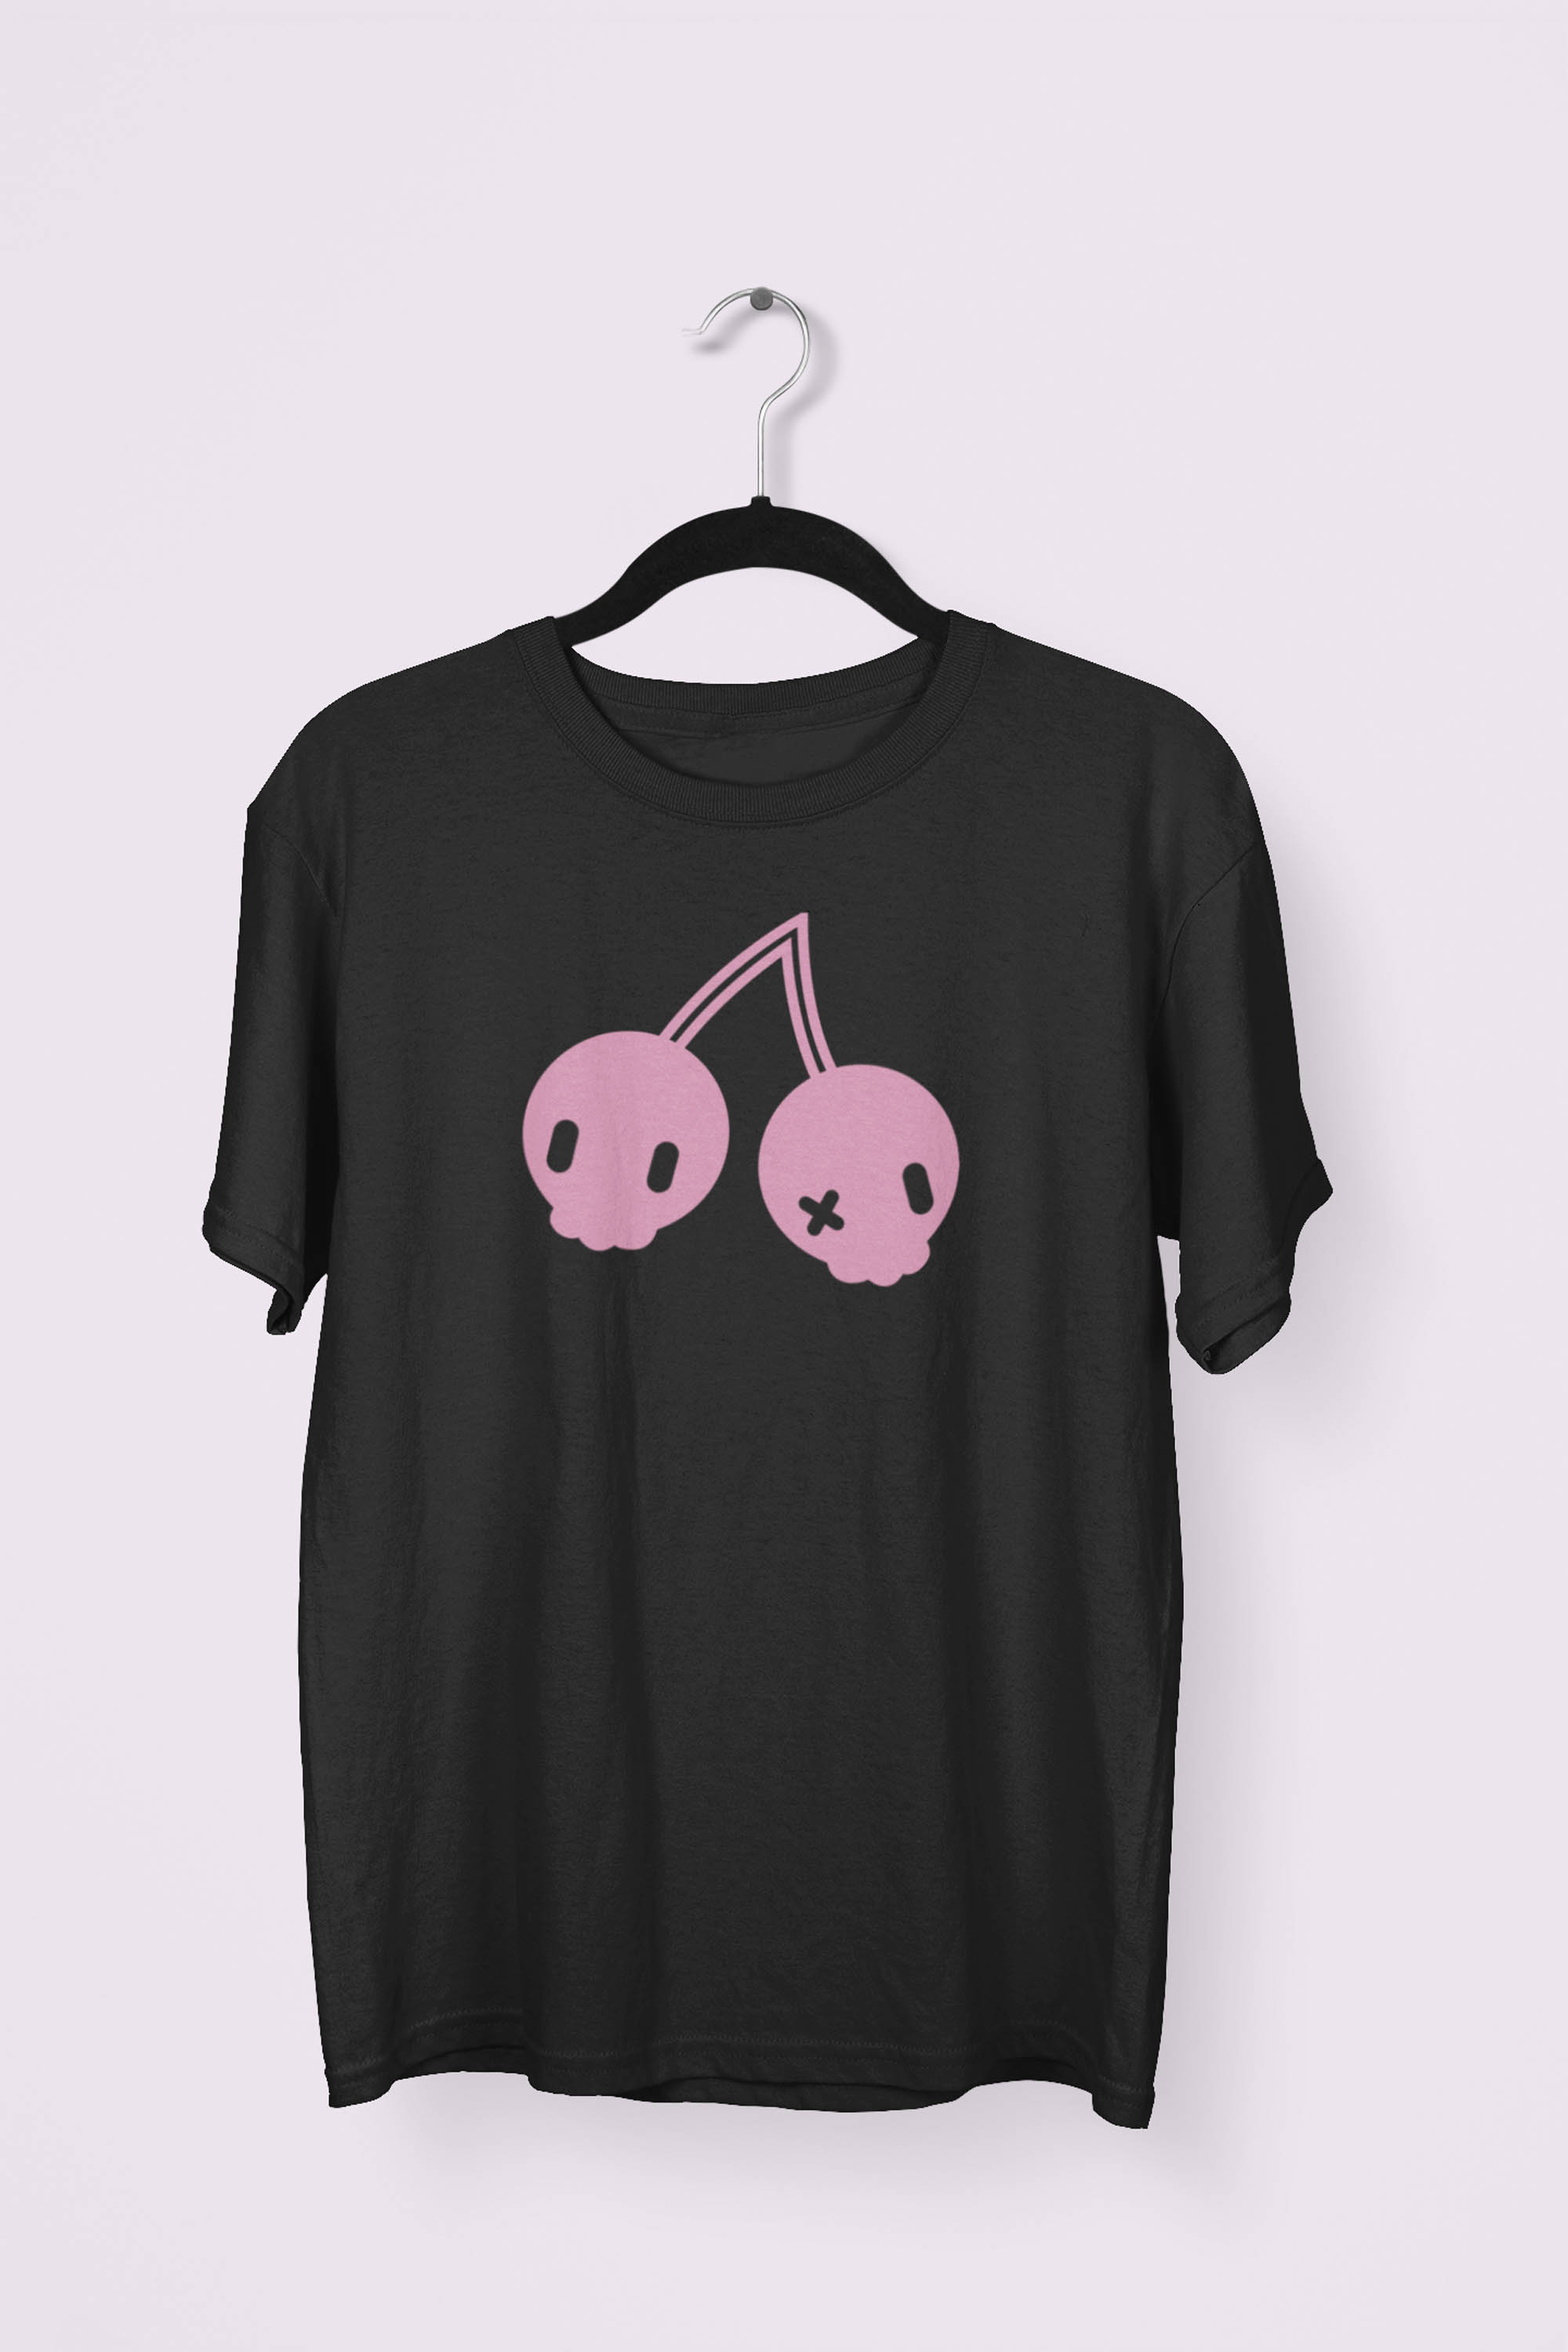 Cherry Skulls T-shirt by Dokkirii - Pink/Black